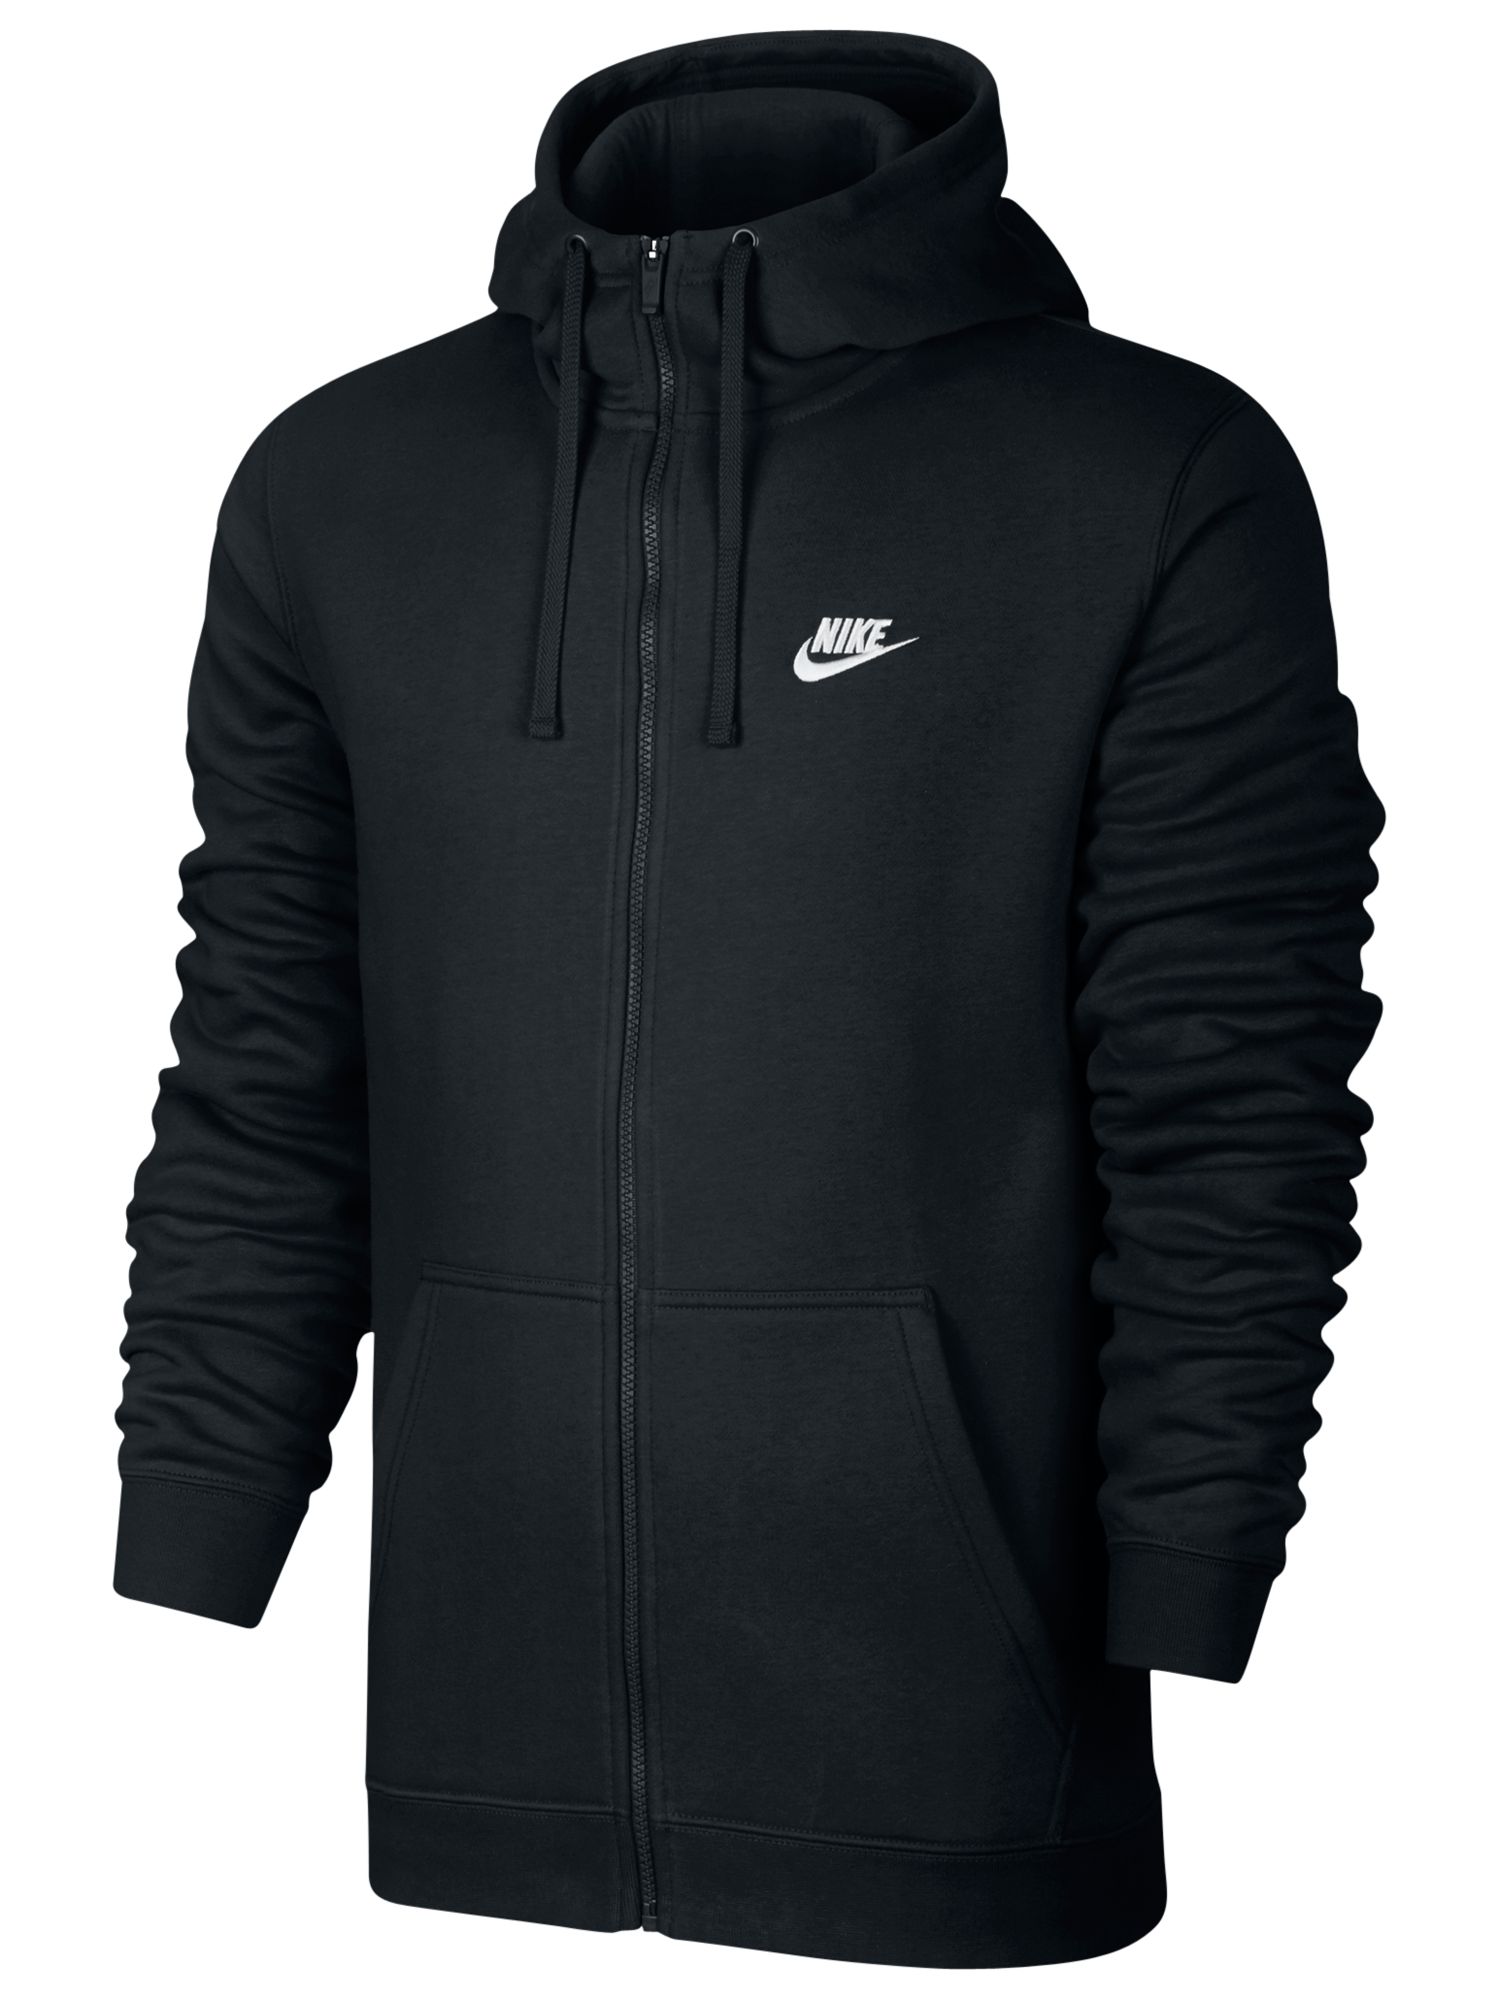 Nike Sportswear Hoodie, Black/White, M